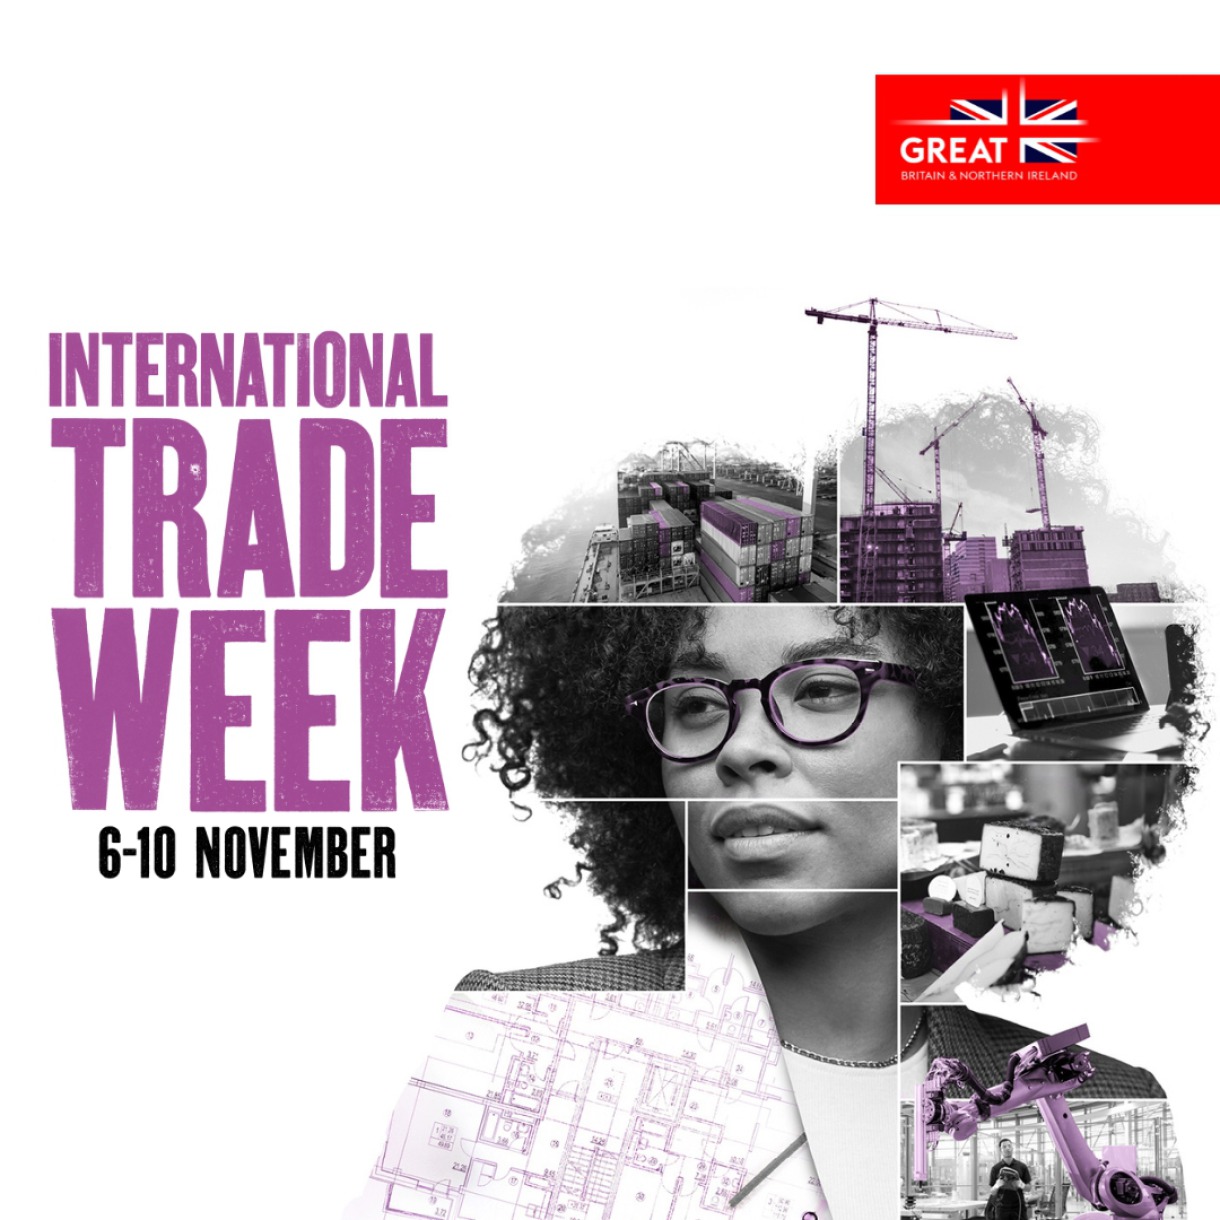 International trade week